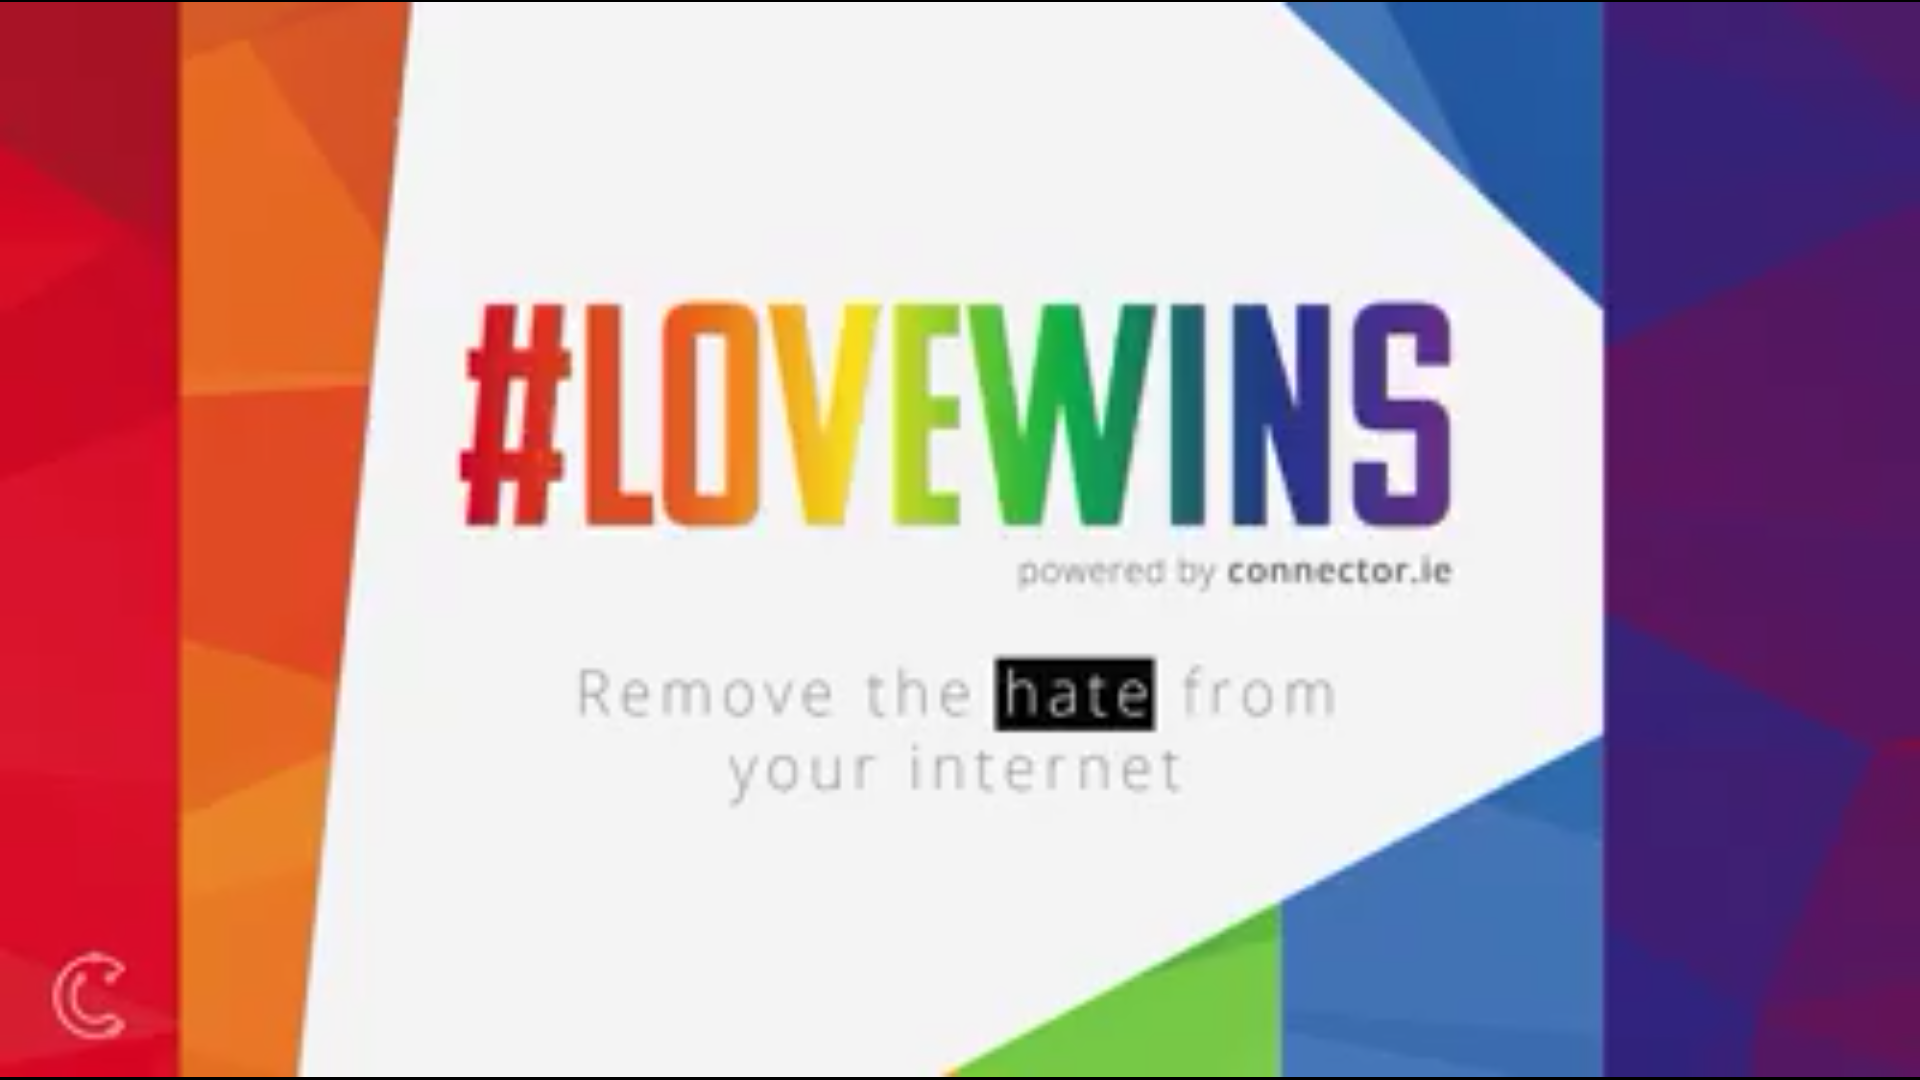 Homophobia : Google Chrome Extension #LoveWins Rewrites Homophobic Slurs